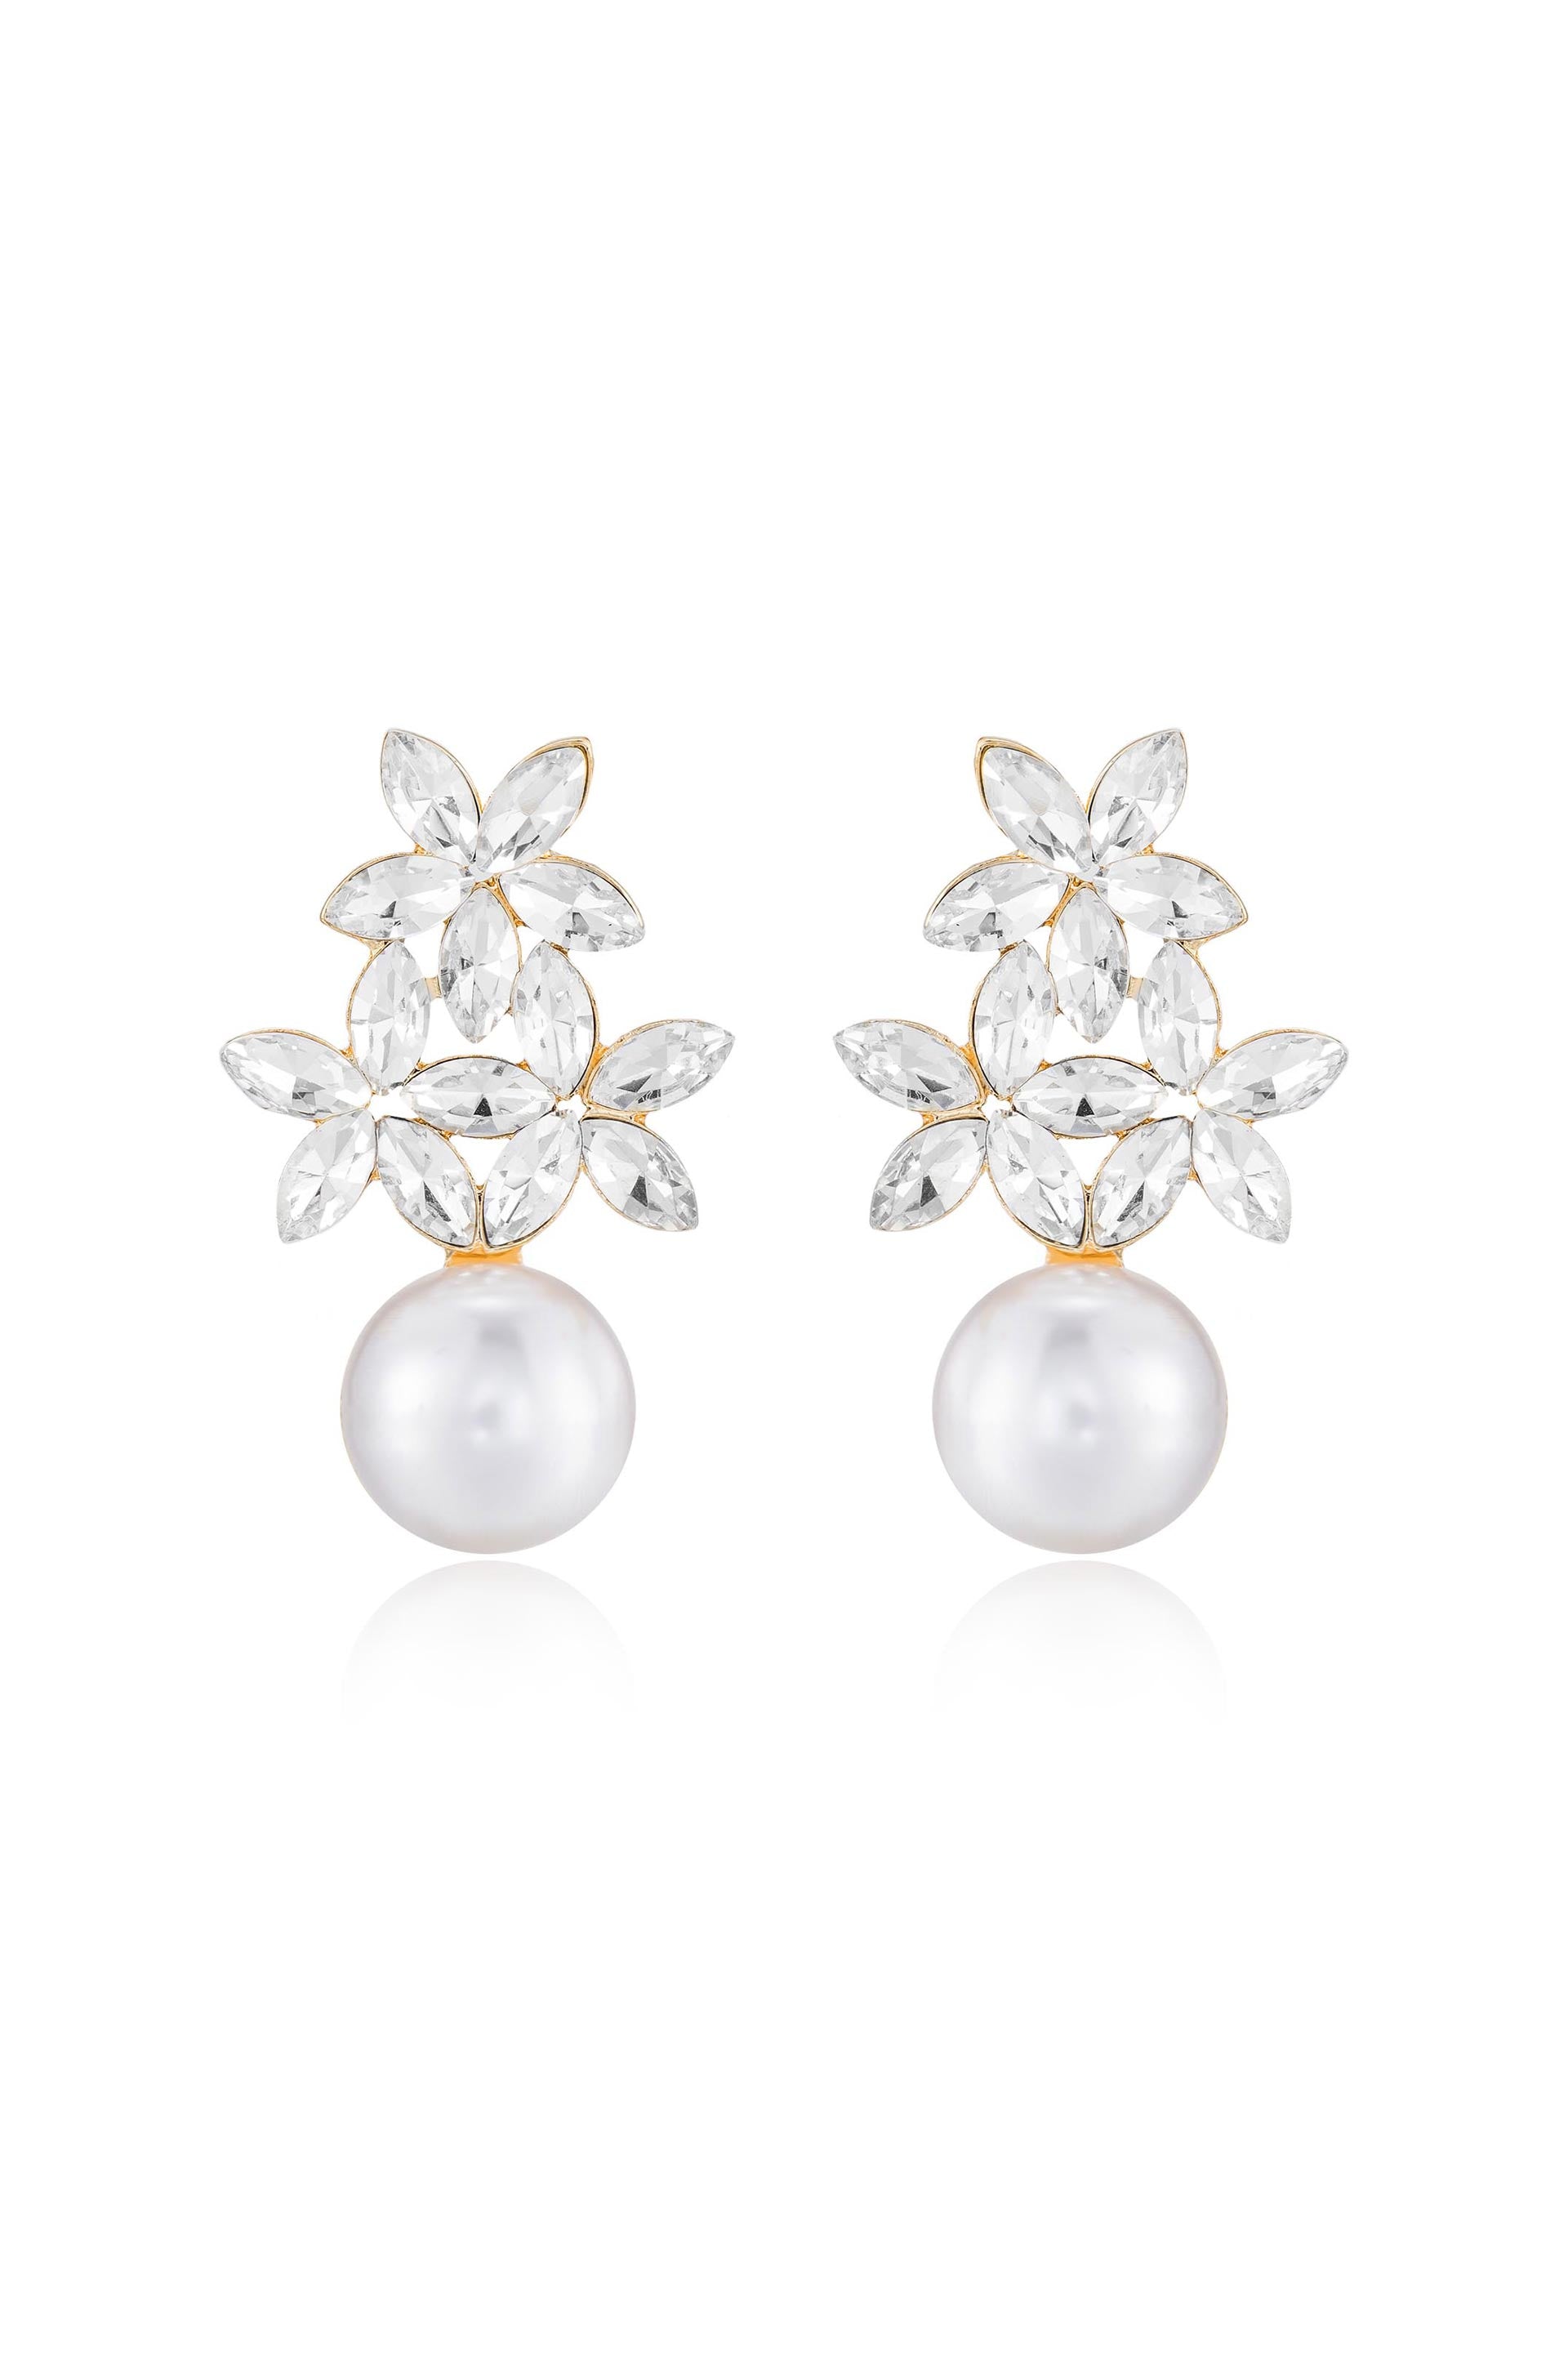 Best Day Crystal & Pearl Earrings - Premium Earrings from Ettika - Just $45! Shop now at Tooksie